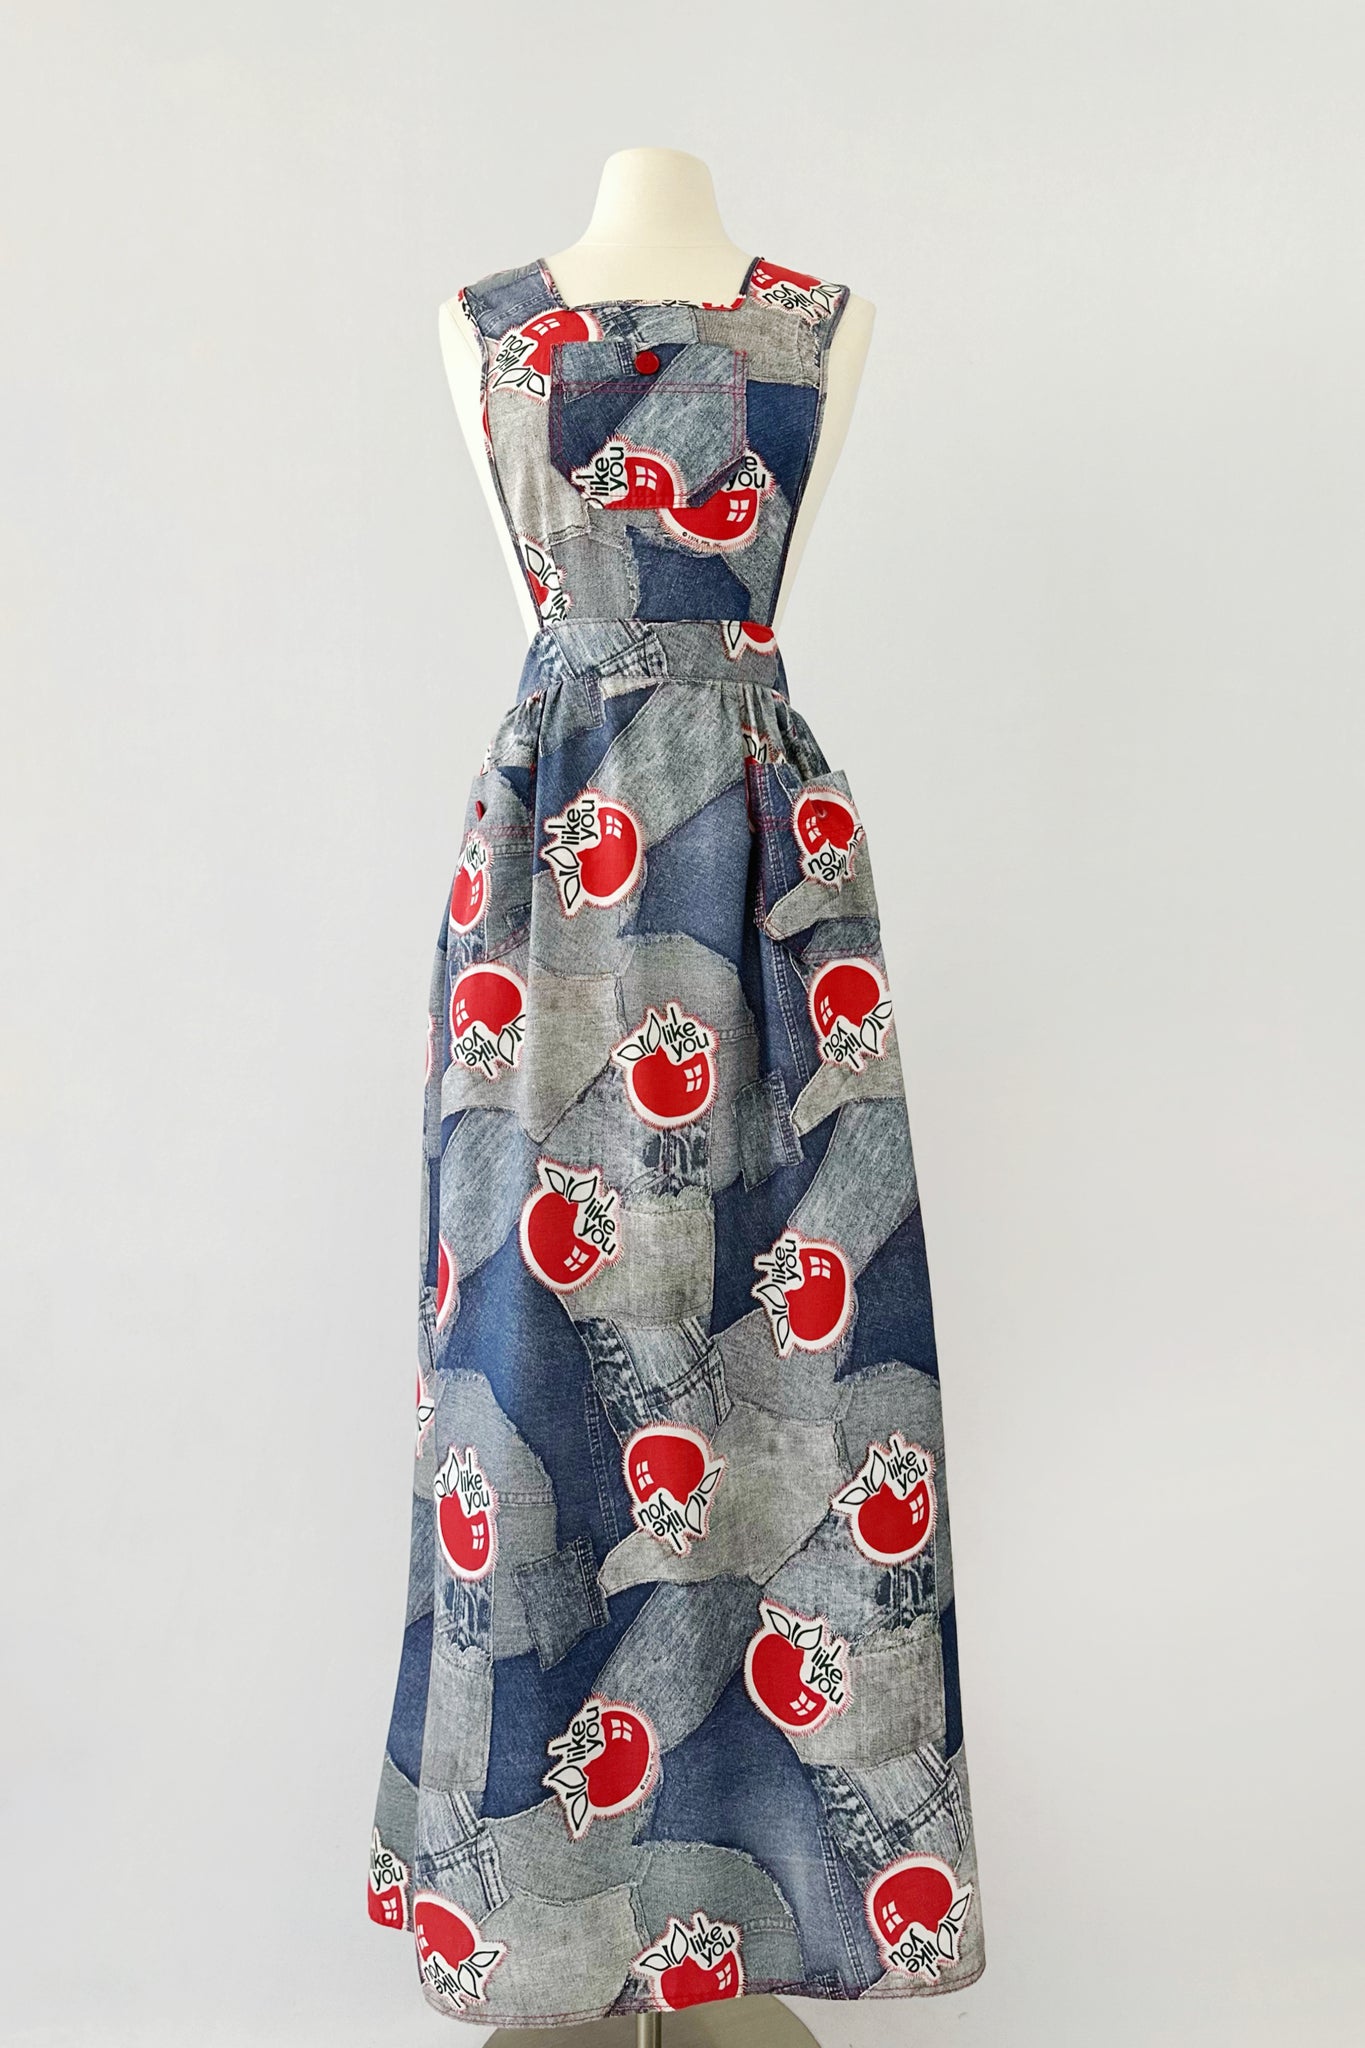 Vintage 1950s polka dot pinafore dress - Ruby Lane